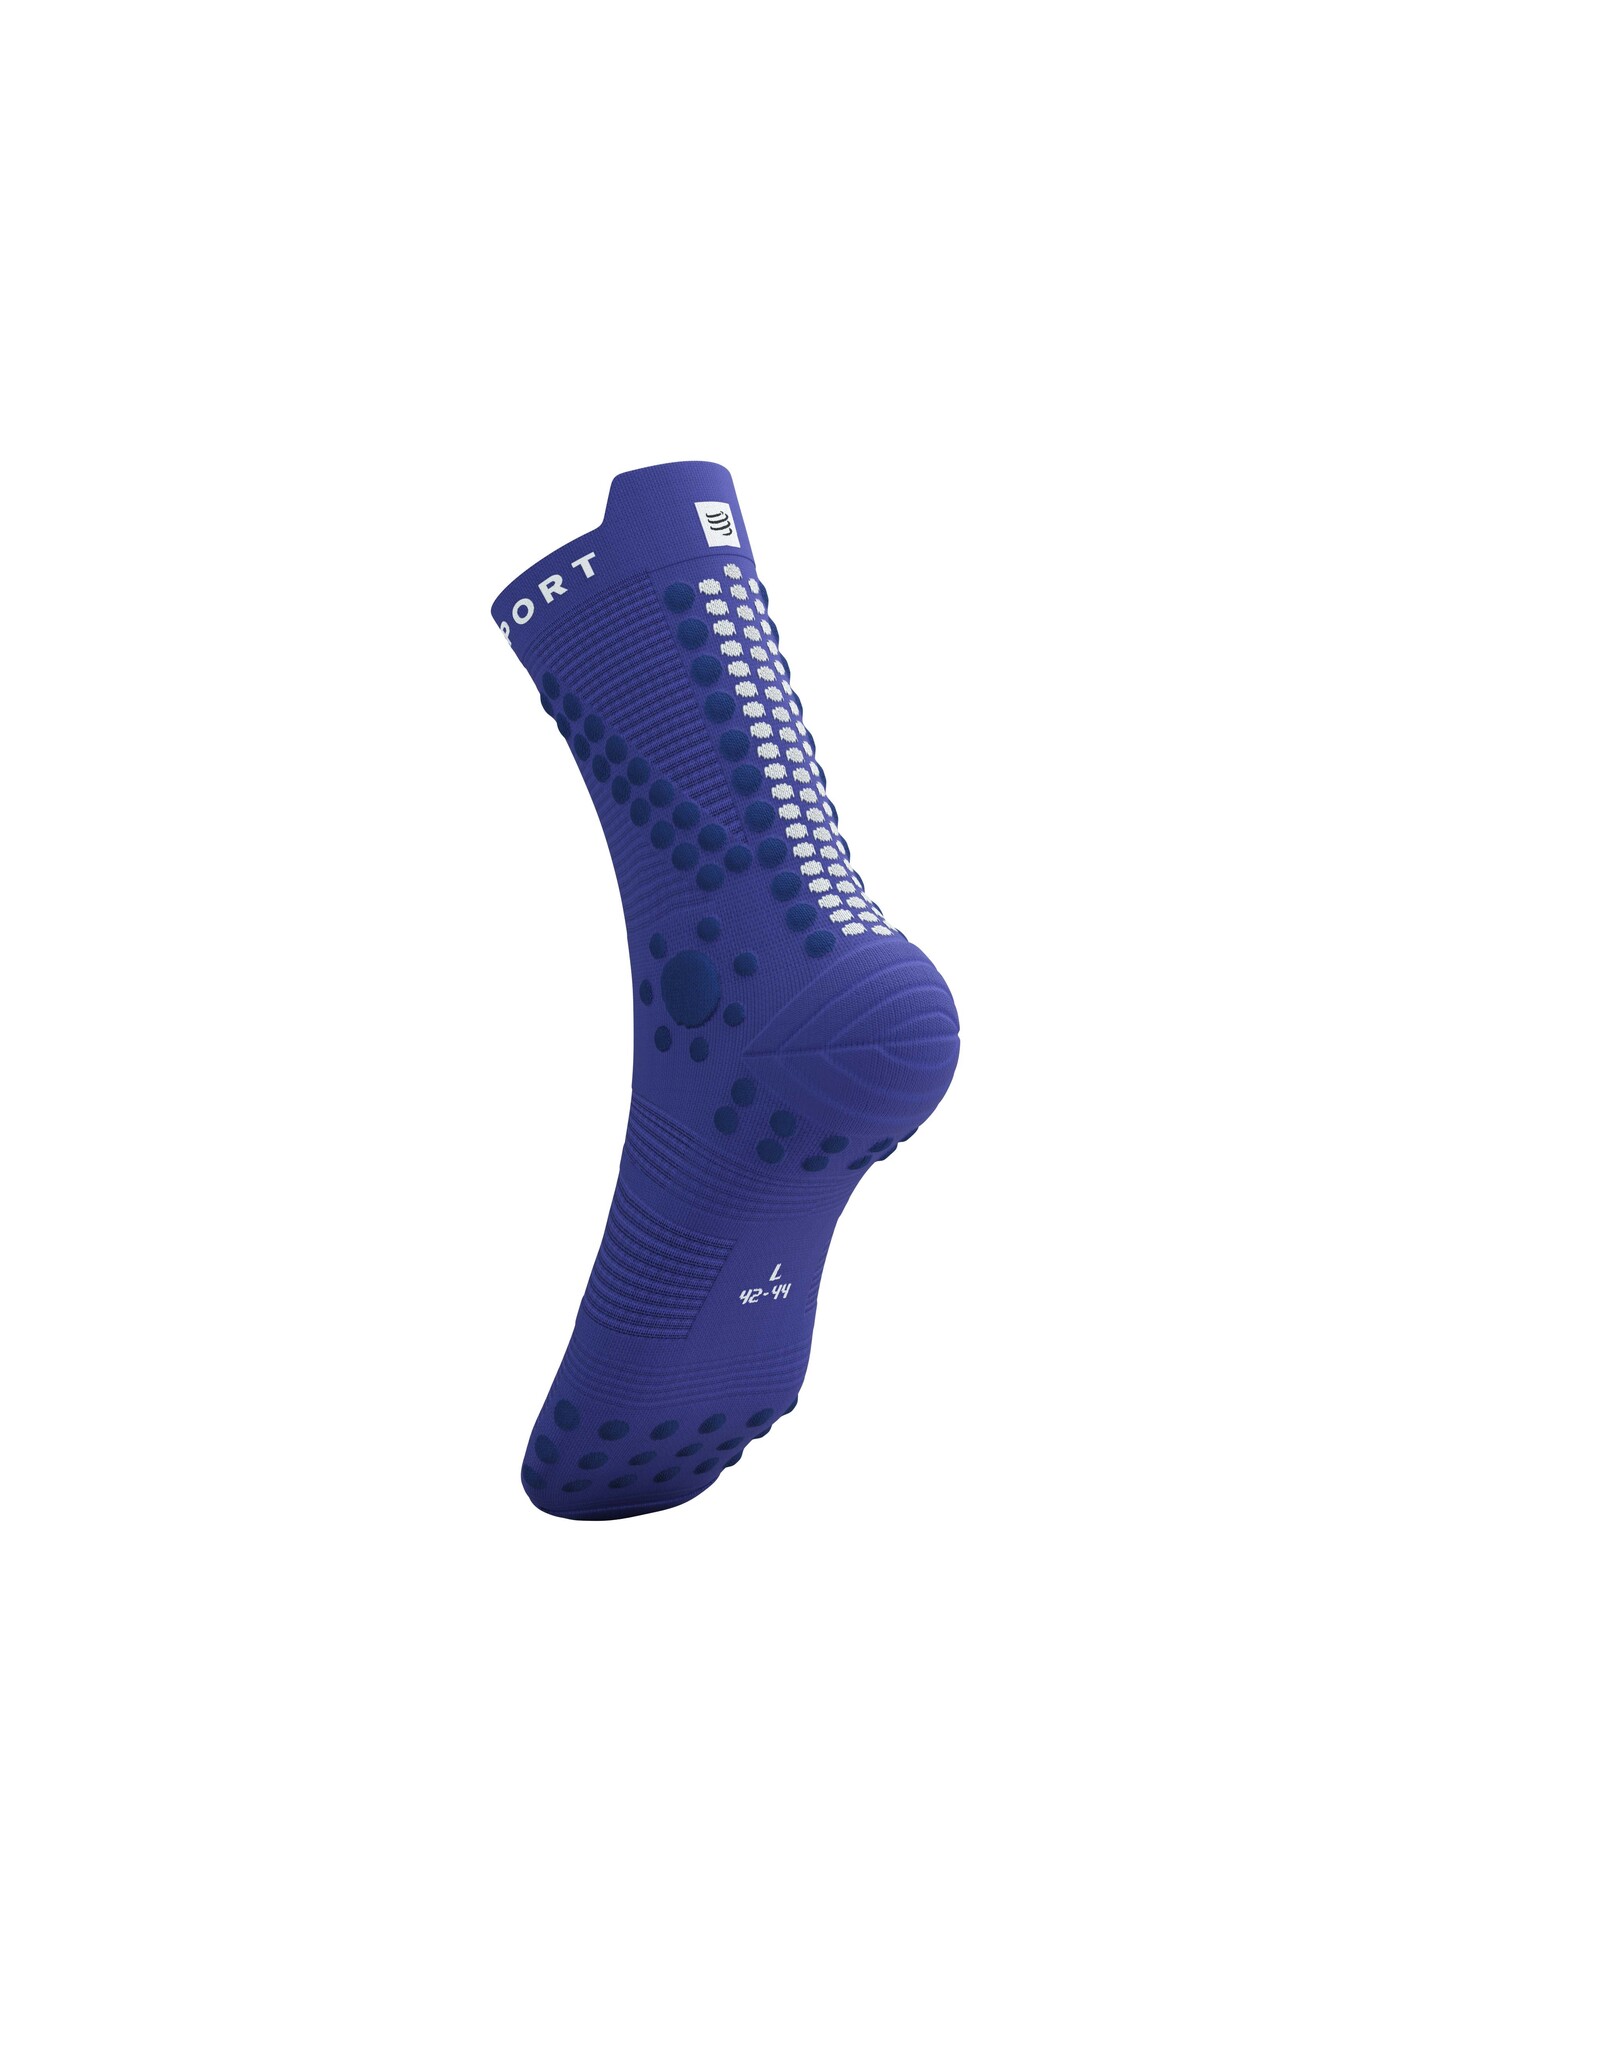 Compressport Pro Racing Socks v4.0 Trail - Dazzling Blue/Dress Blues/White